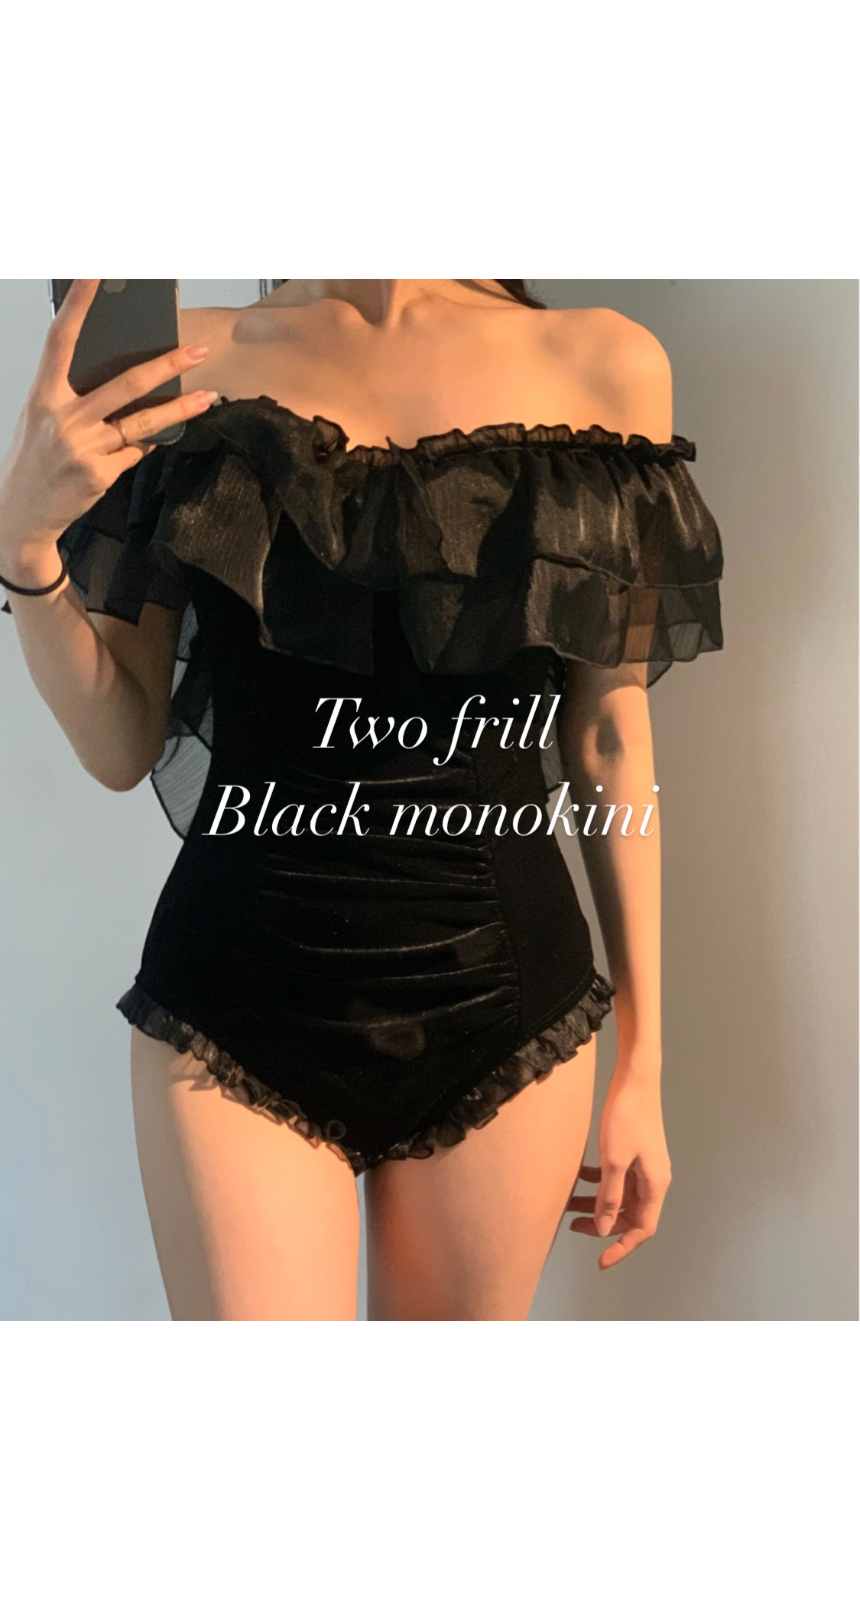 Two frill Black monokini